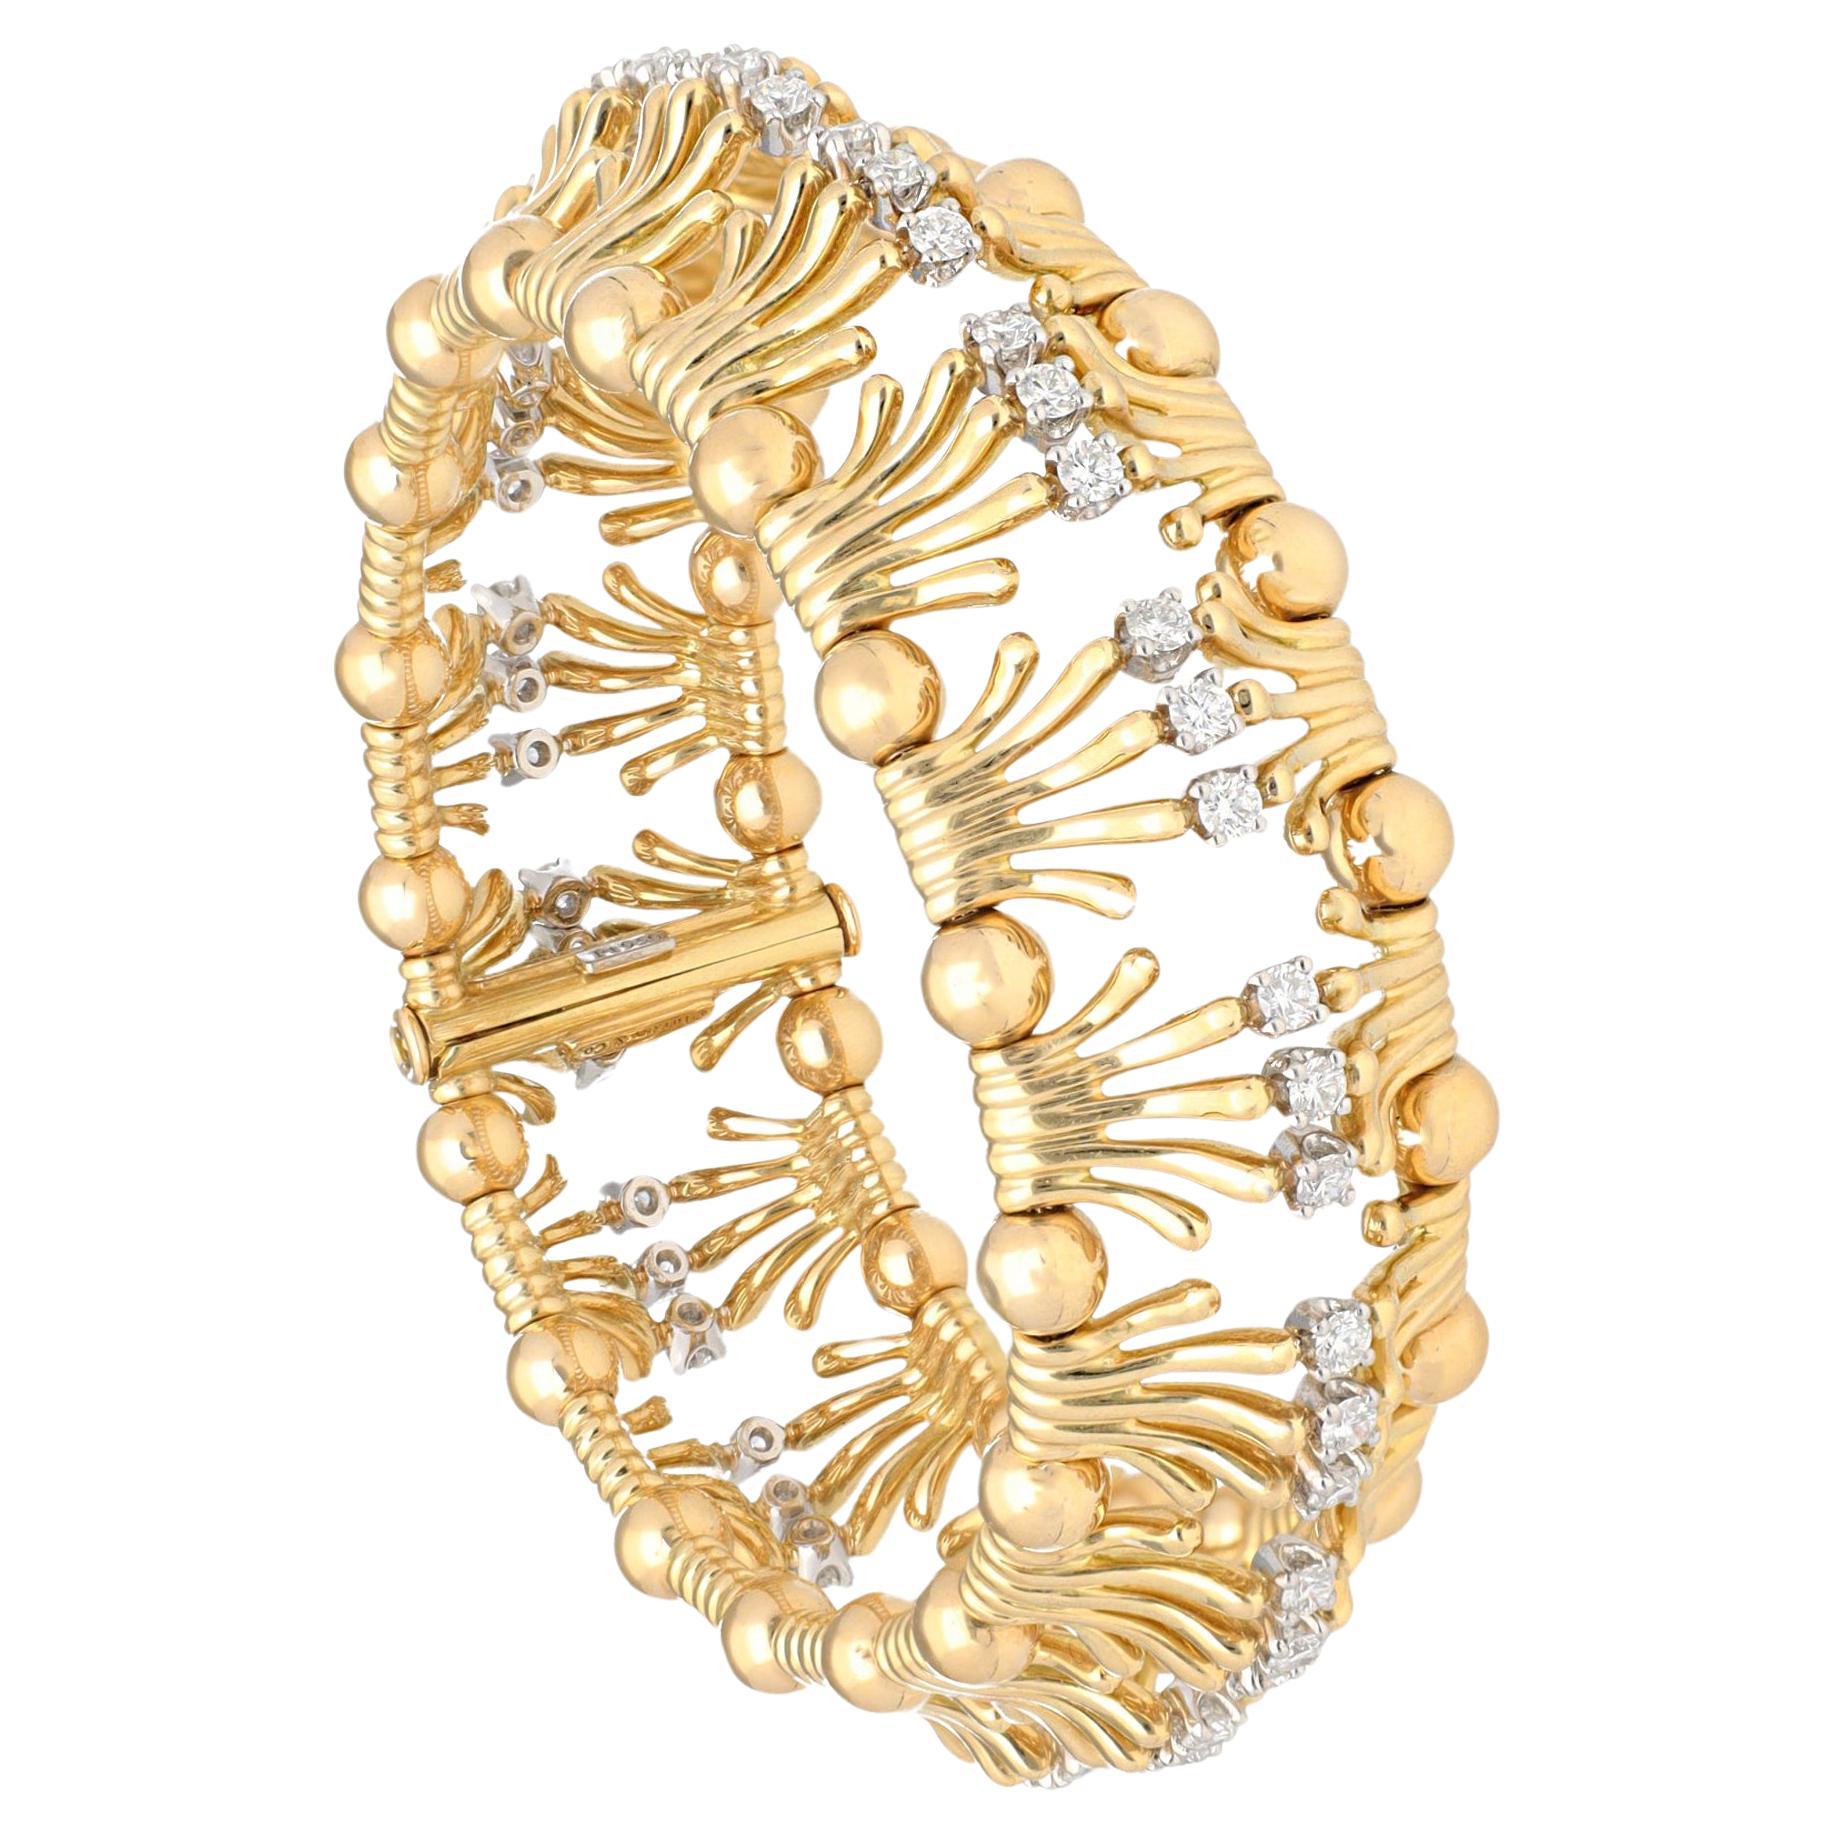 Tiffany & Co. Platinum and 18K, diamond "Hands" Jean Schlumberger bracelet